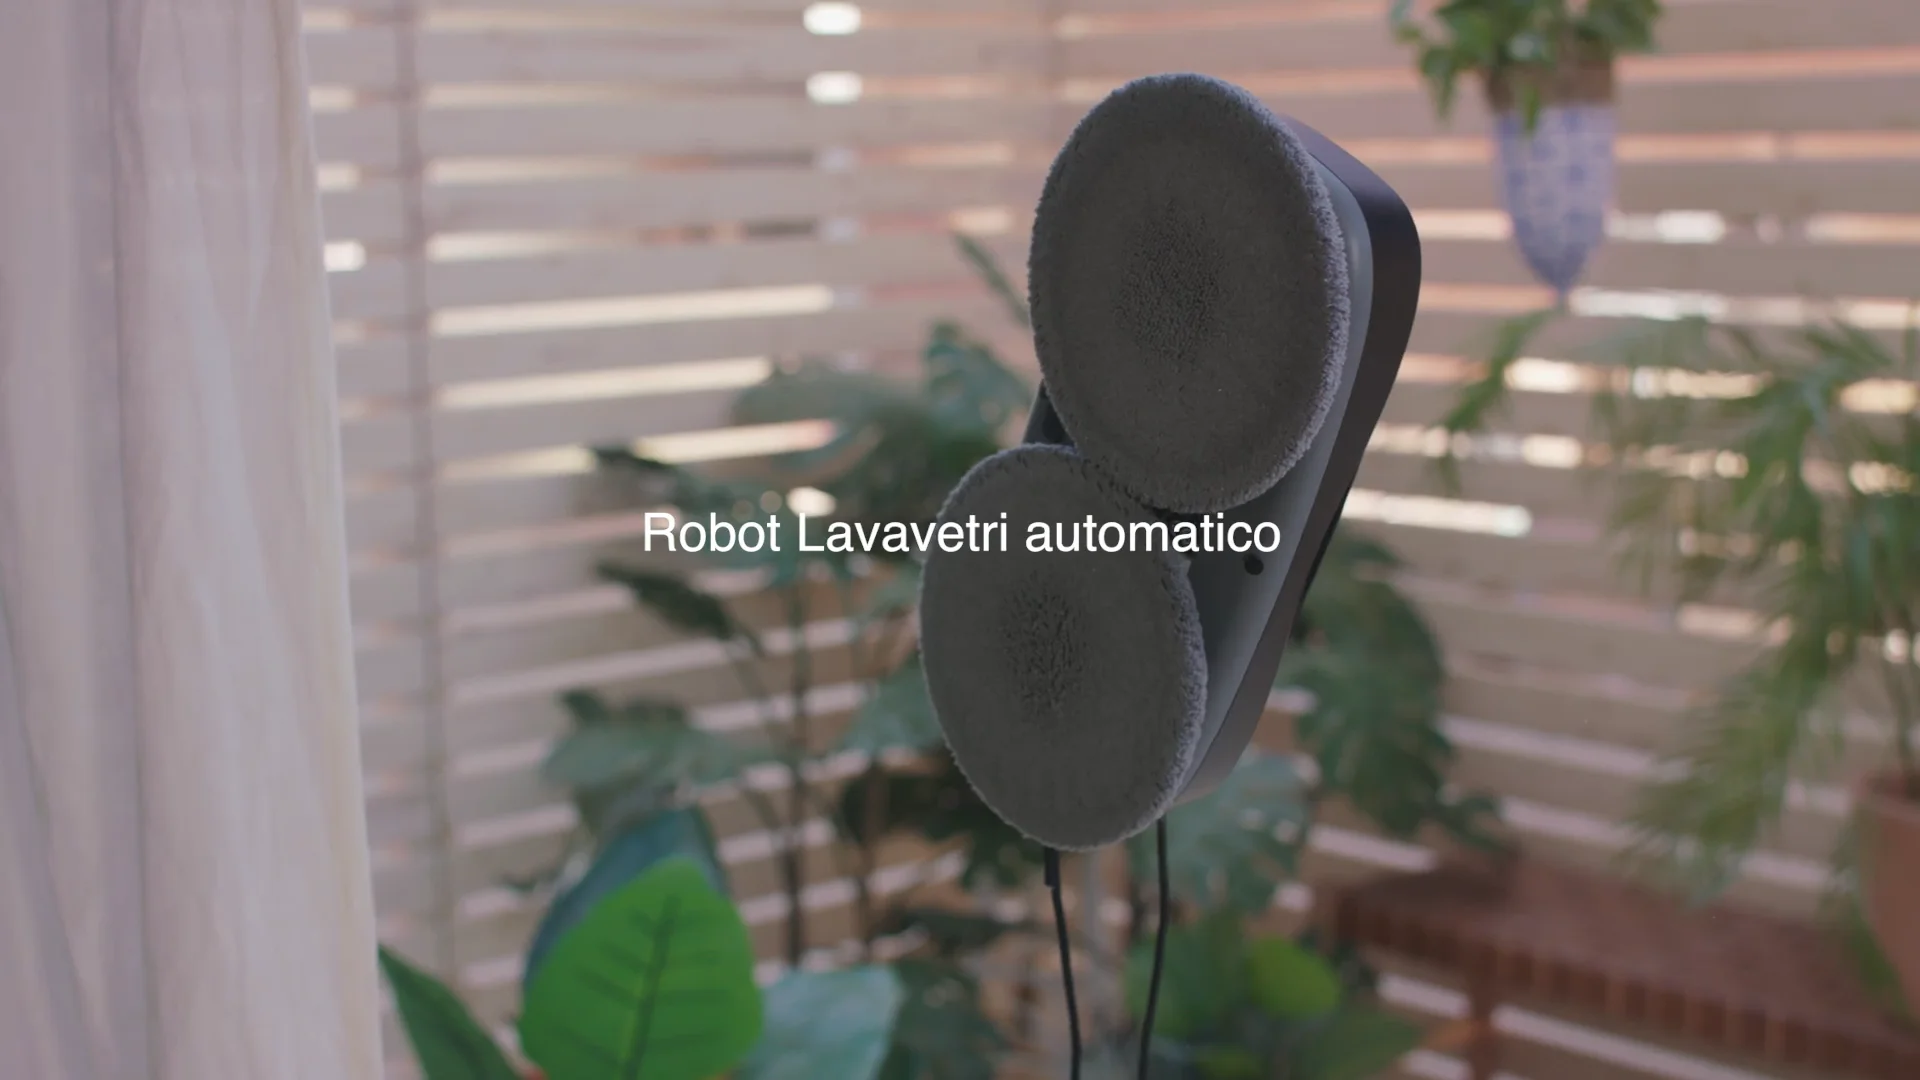 Robot Lavavetri automatico WIPEBOT CREATE on Vimeo